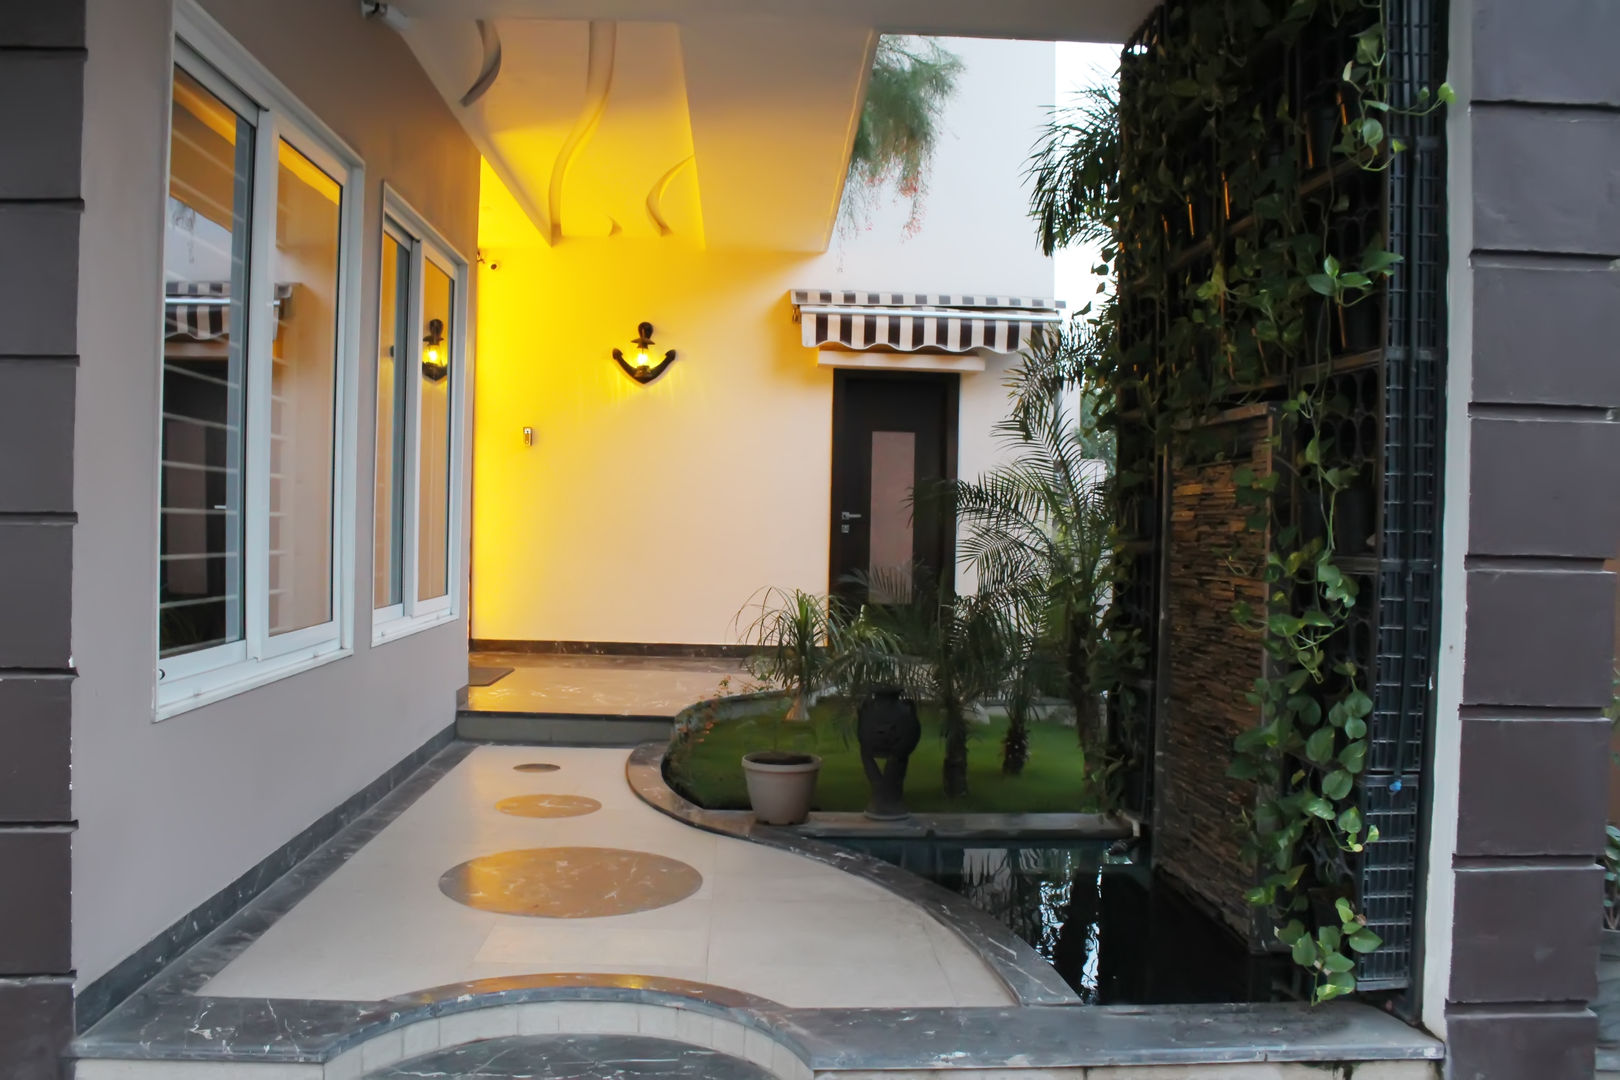 Duplex at Indore, Shadab Anwari & Associates. Shadab Anwari & Associates. Asian style garden Building,Plant,Property,Window,Fixture,Interior design,Architecture,Door,Yellow,Shade